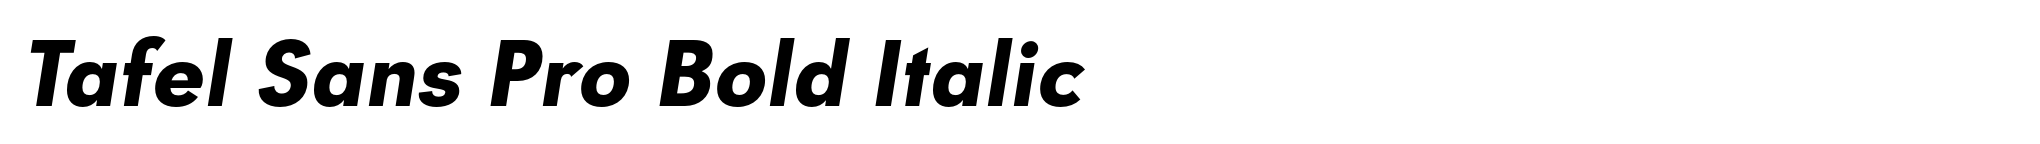 Tafel Sans Pro Bold Italic image